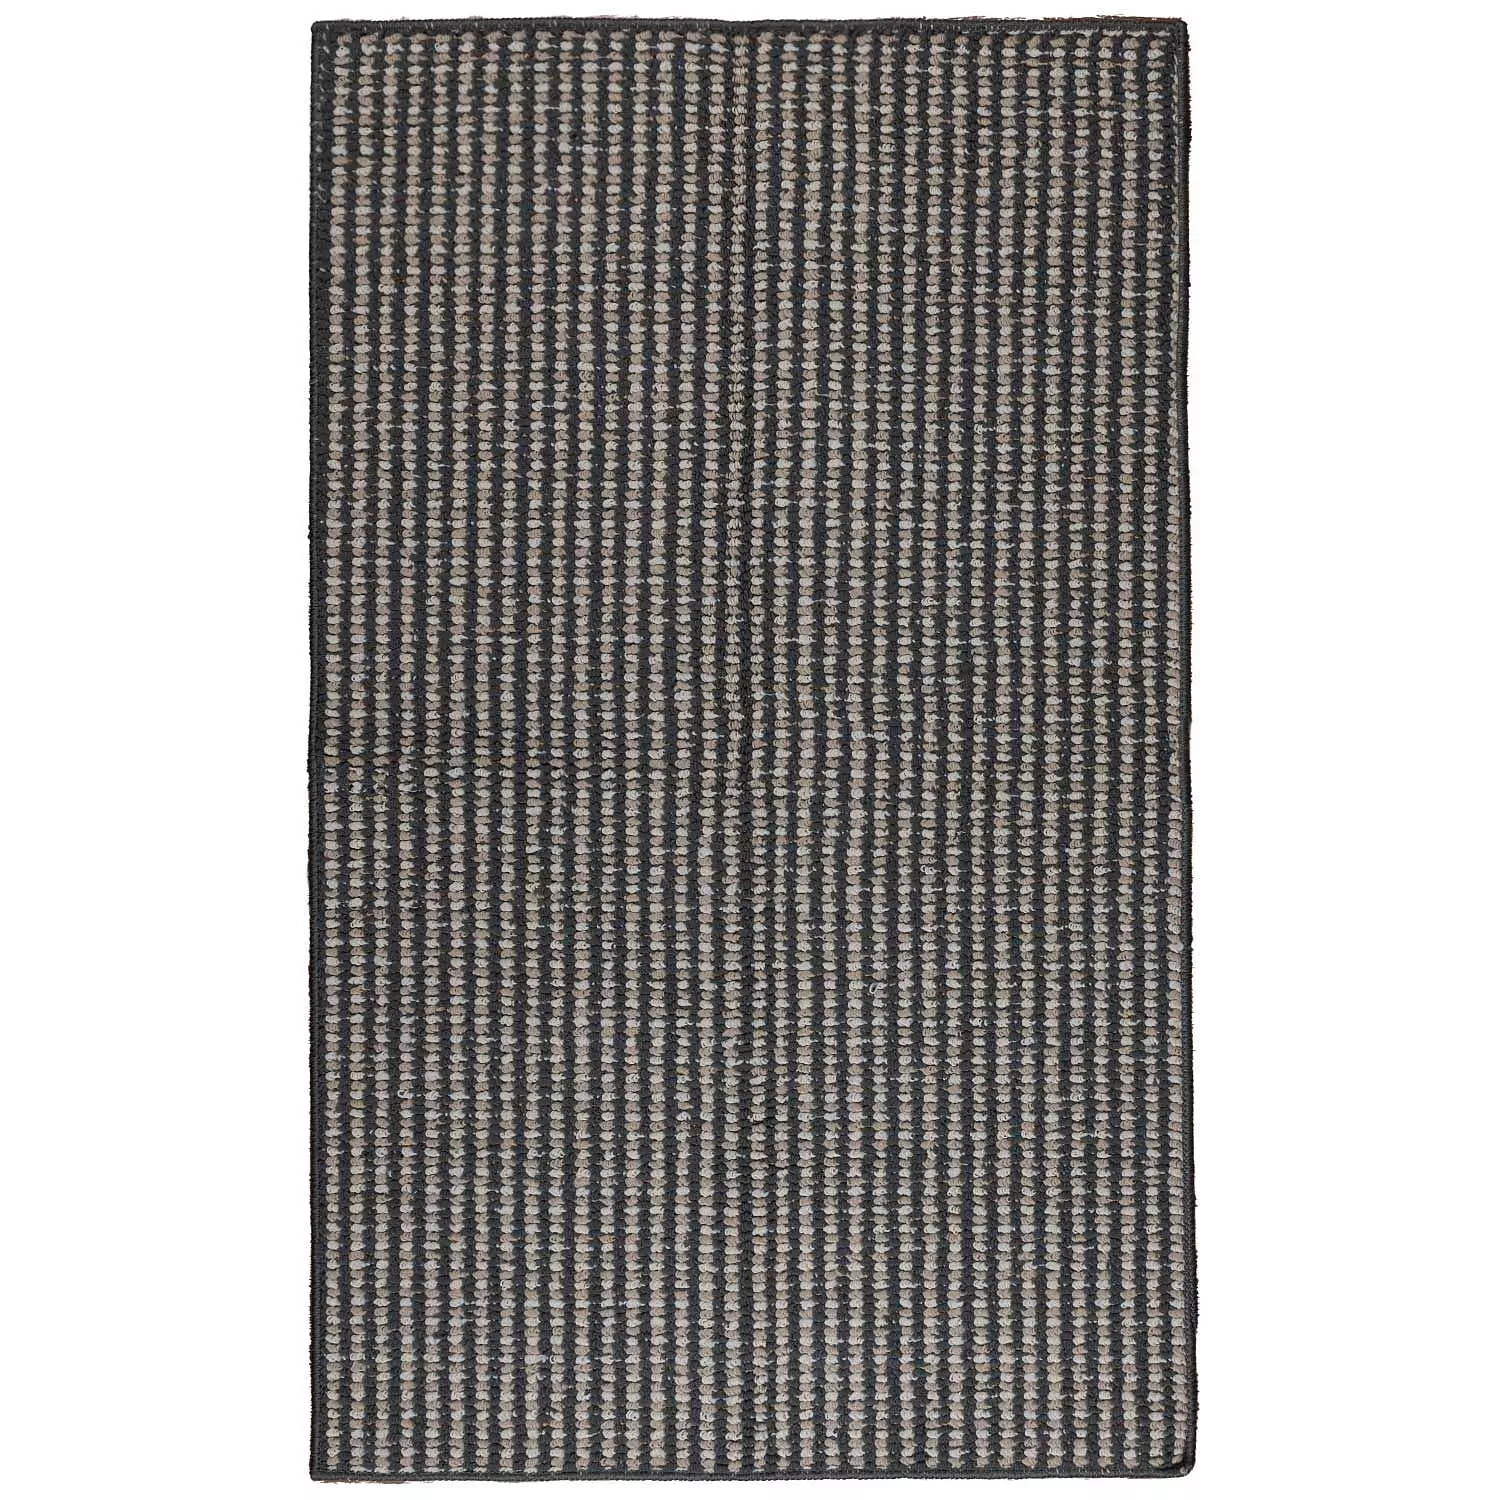 MELISANDRA Collection, indoor accent rug, grey trellis chenille, 2.5'x4'